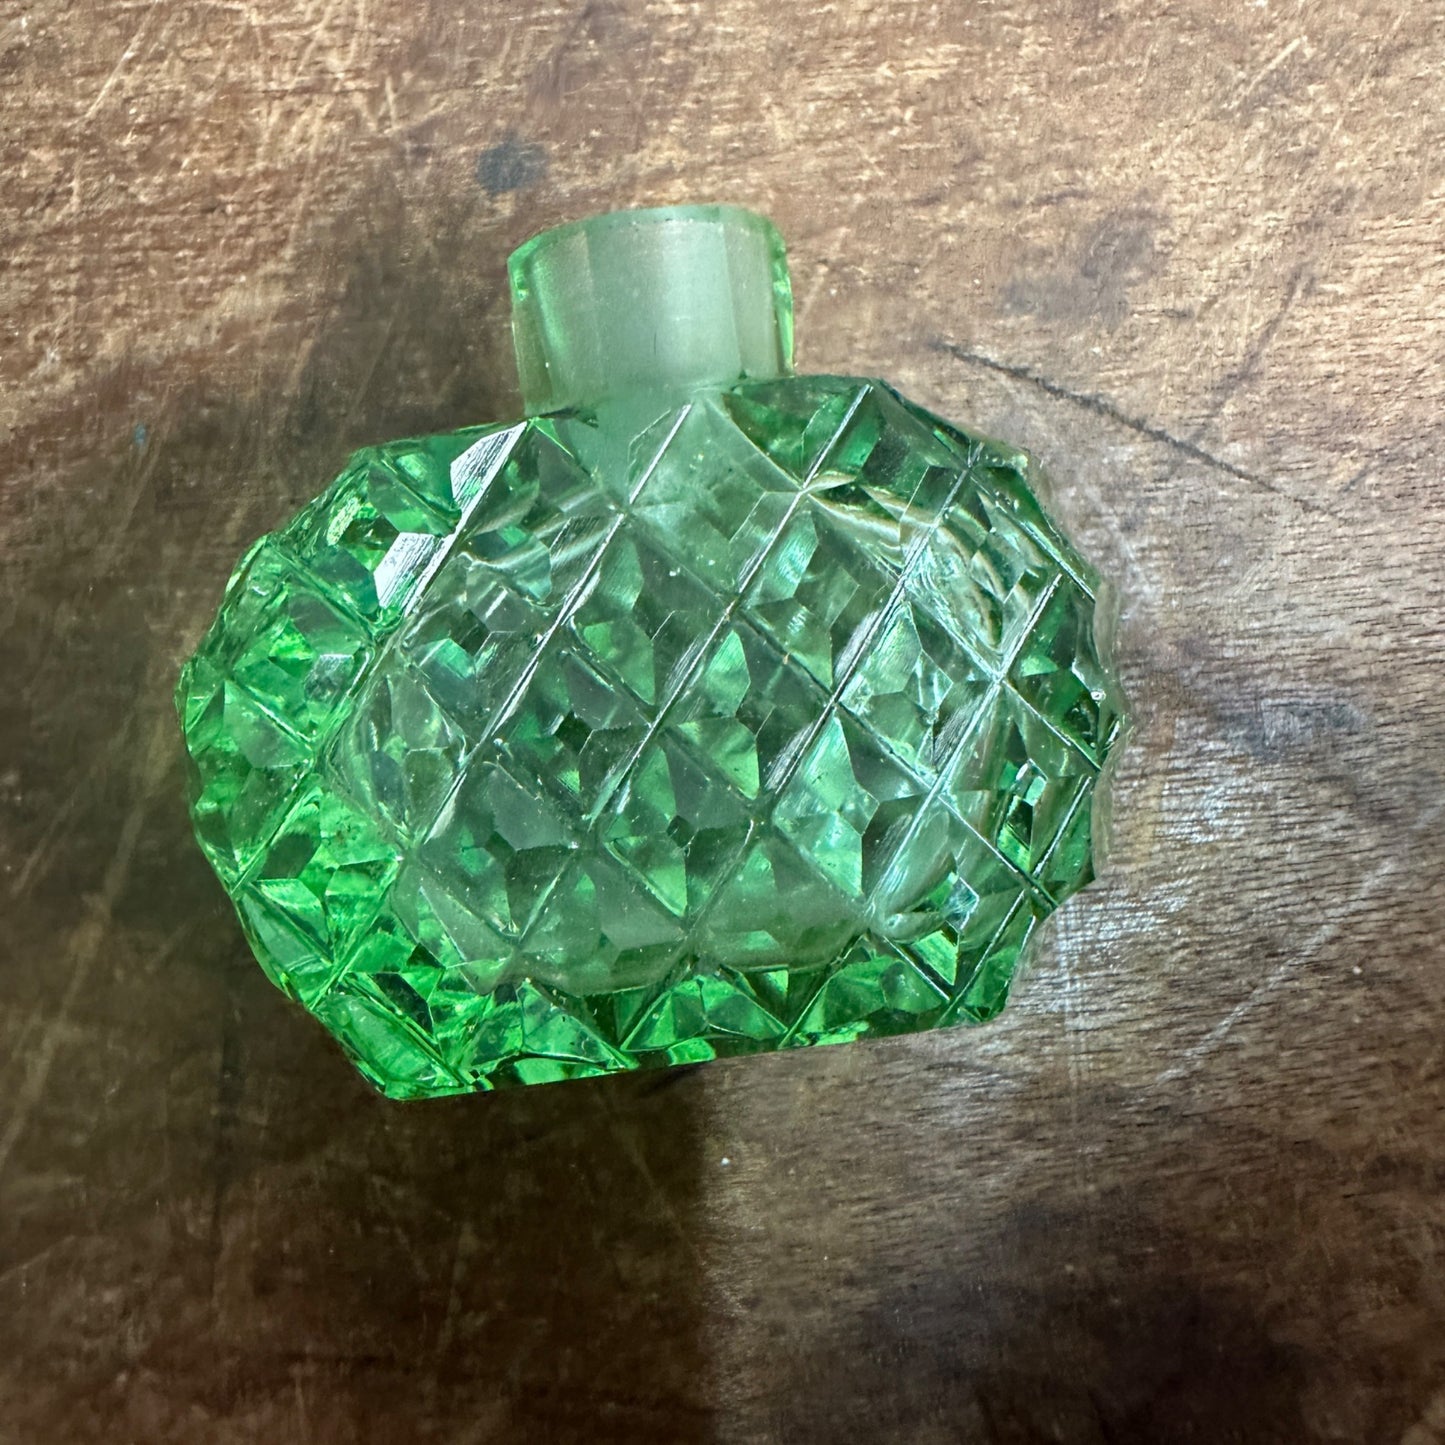 Vintage Small Uranium Glass Woman's Perfume Bottle 1.5" Tall - Glows UV Light